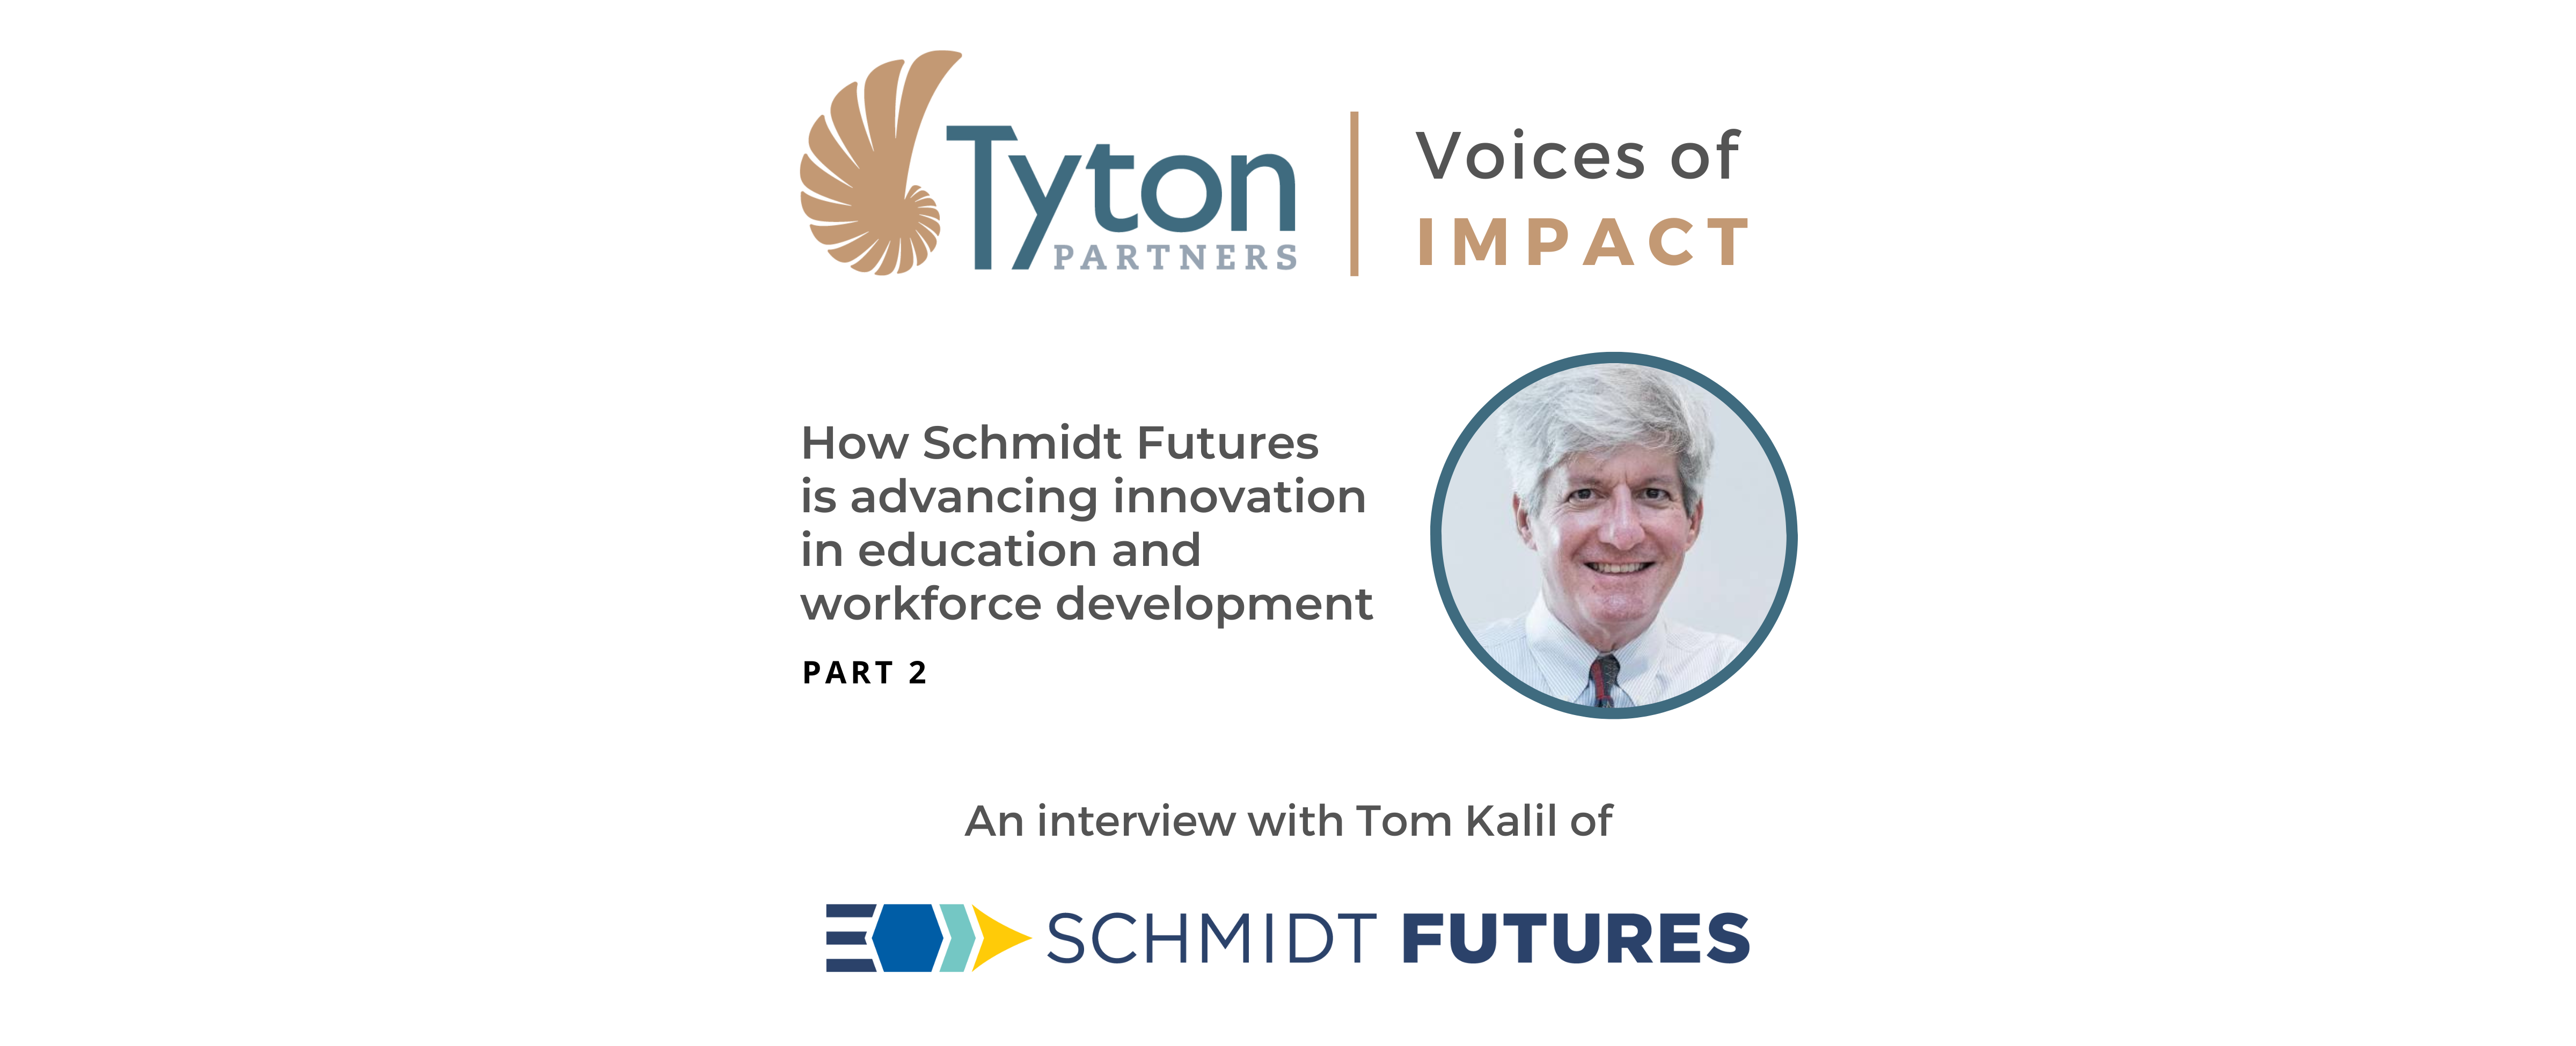 Tyton Partners Voices of Impact: Tom Kalil of Schmidt Futures part 2